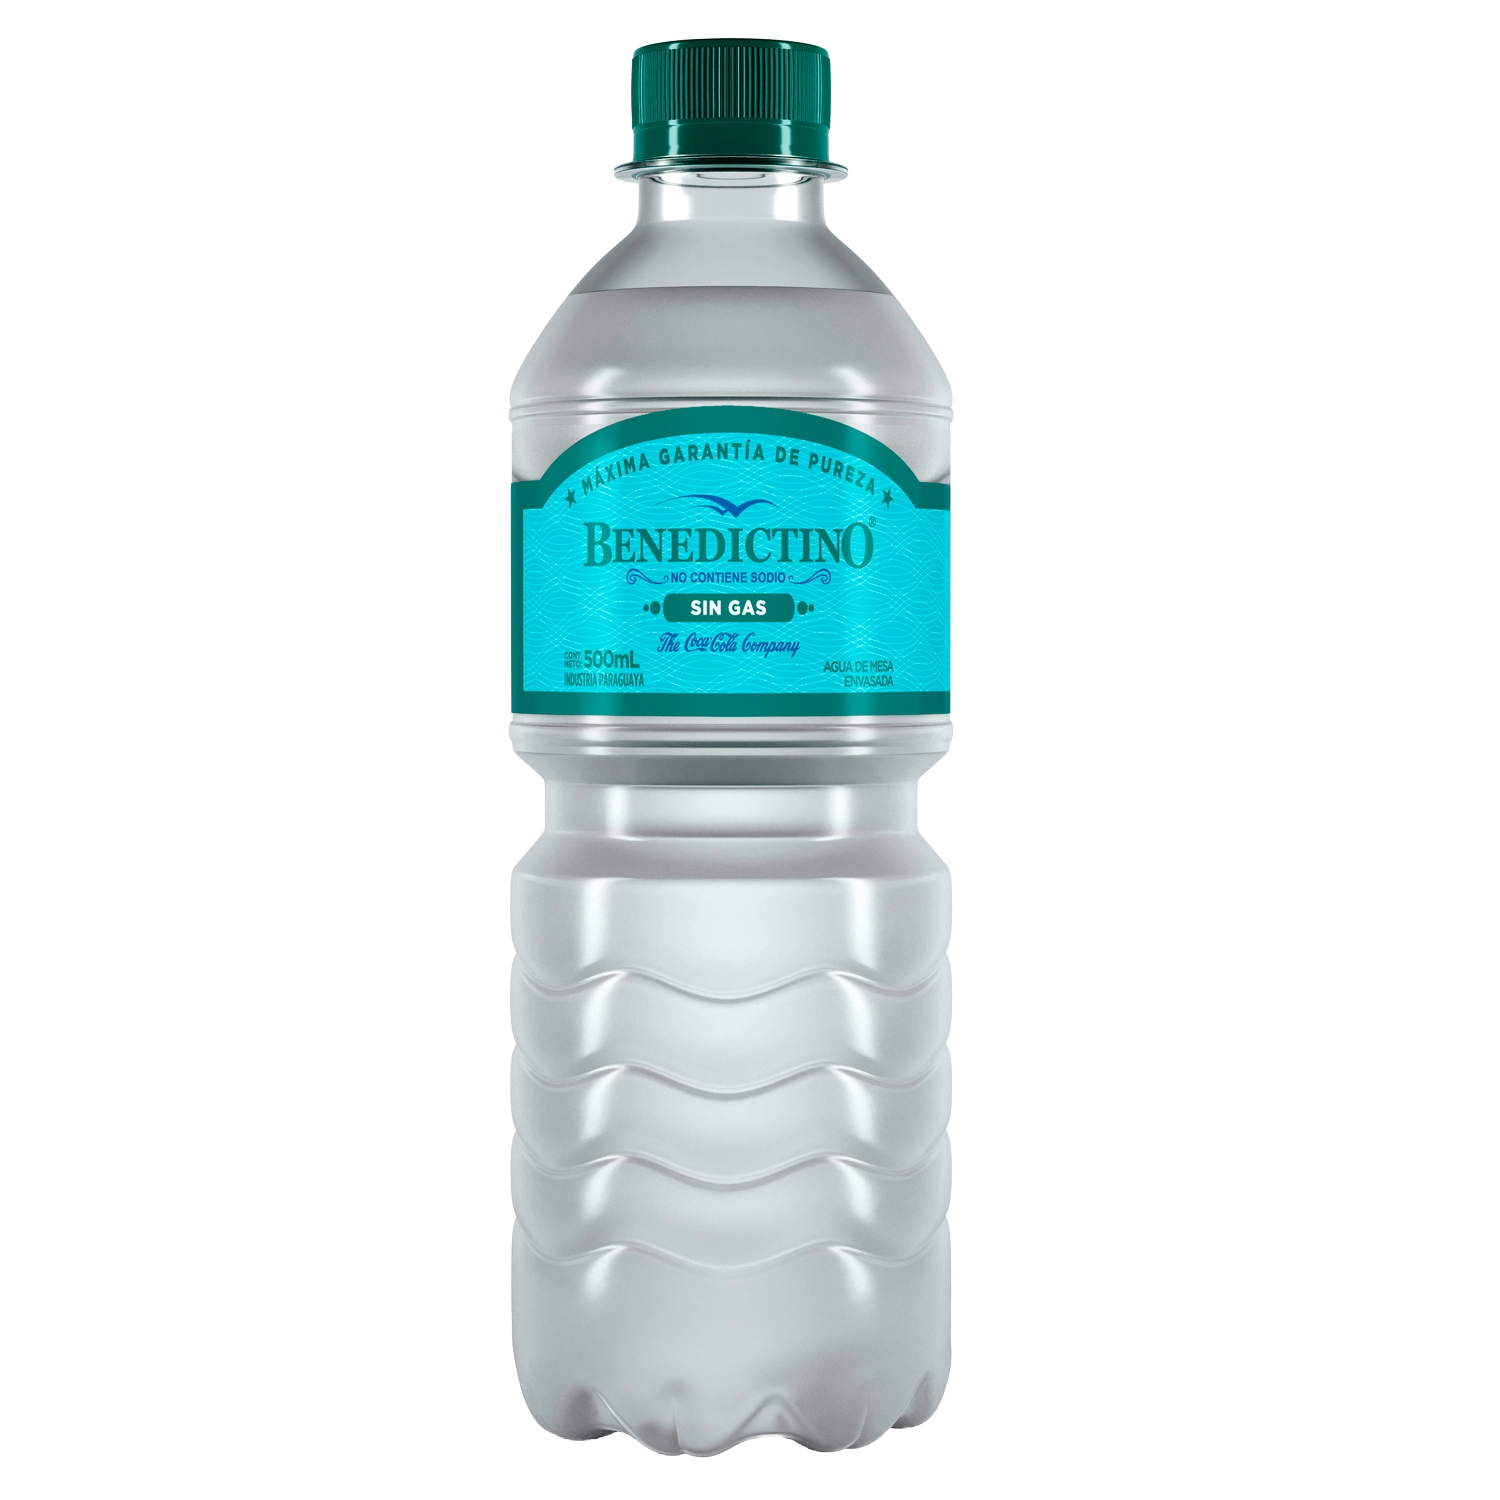 Botella de Benedictino 500 mL